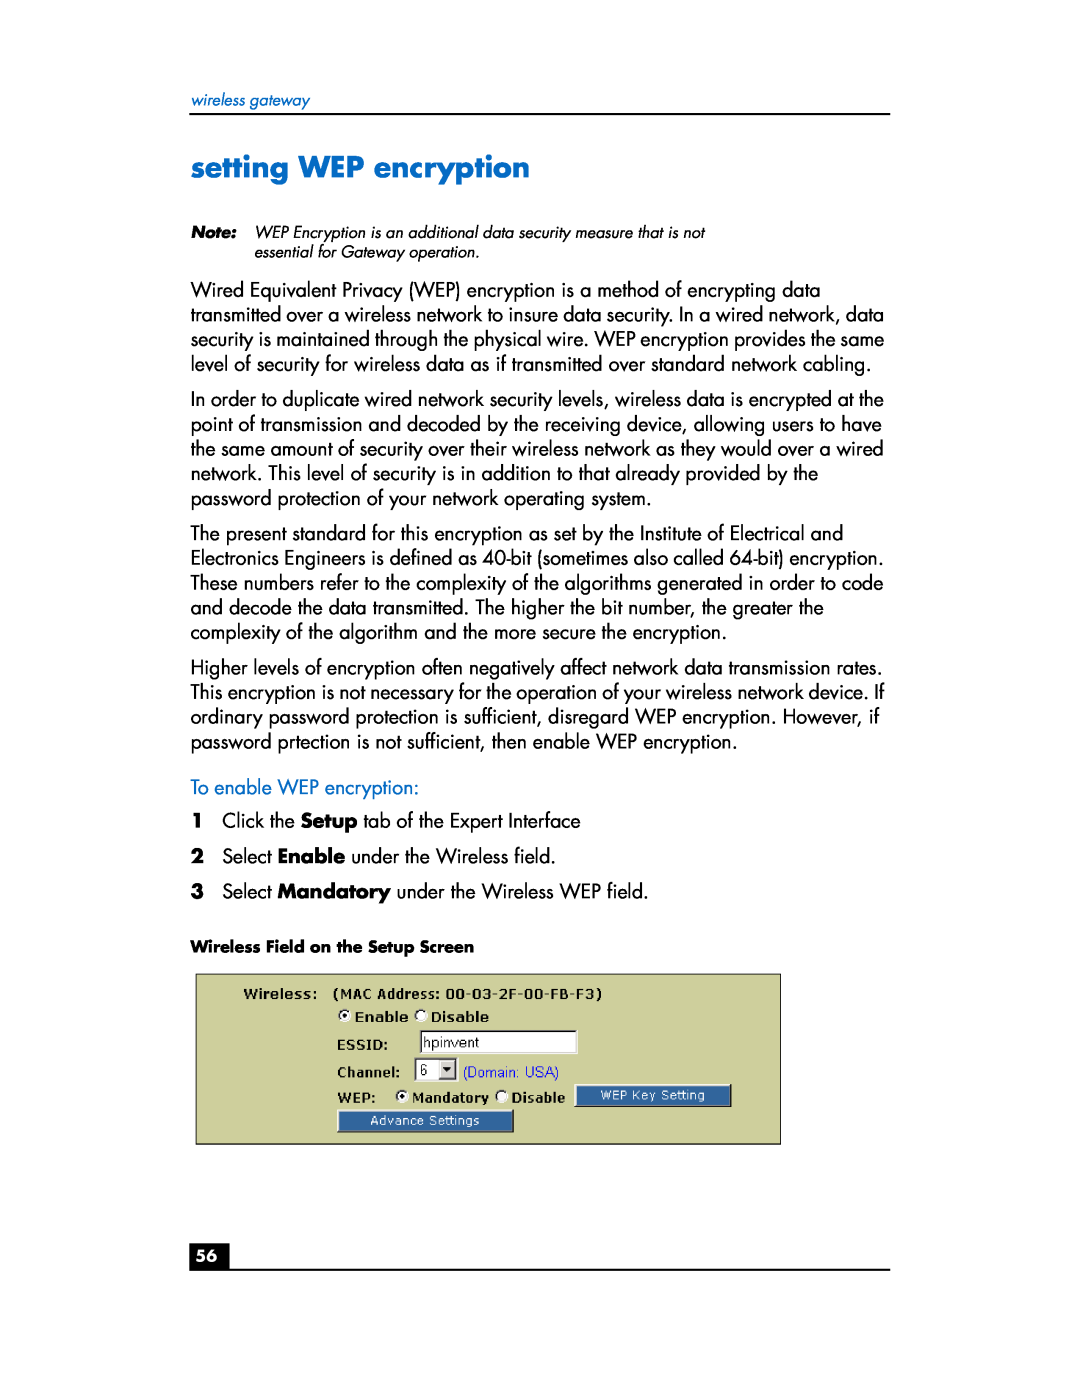 HP hn200w manual setting WEP encryption, To enable WEP encryption 